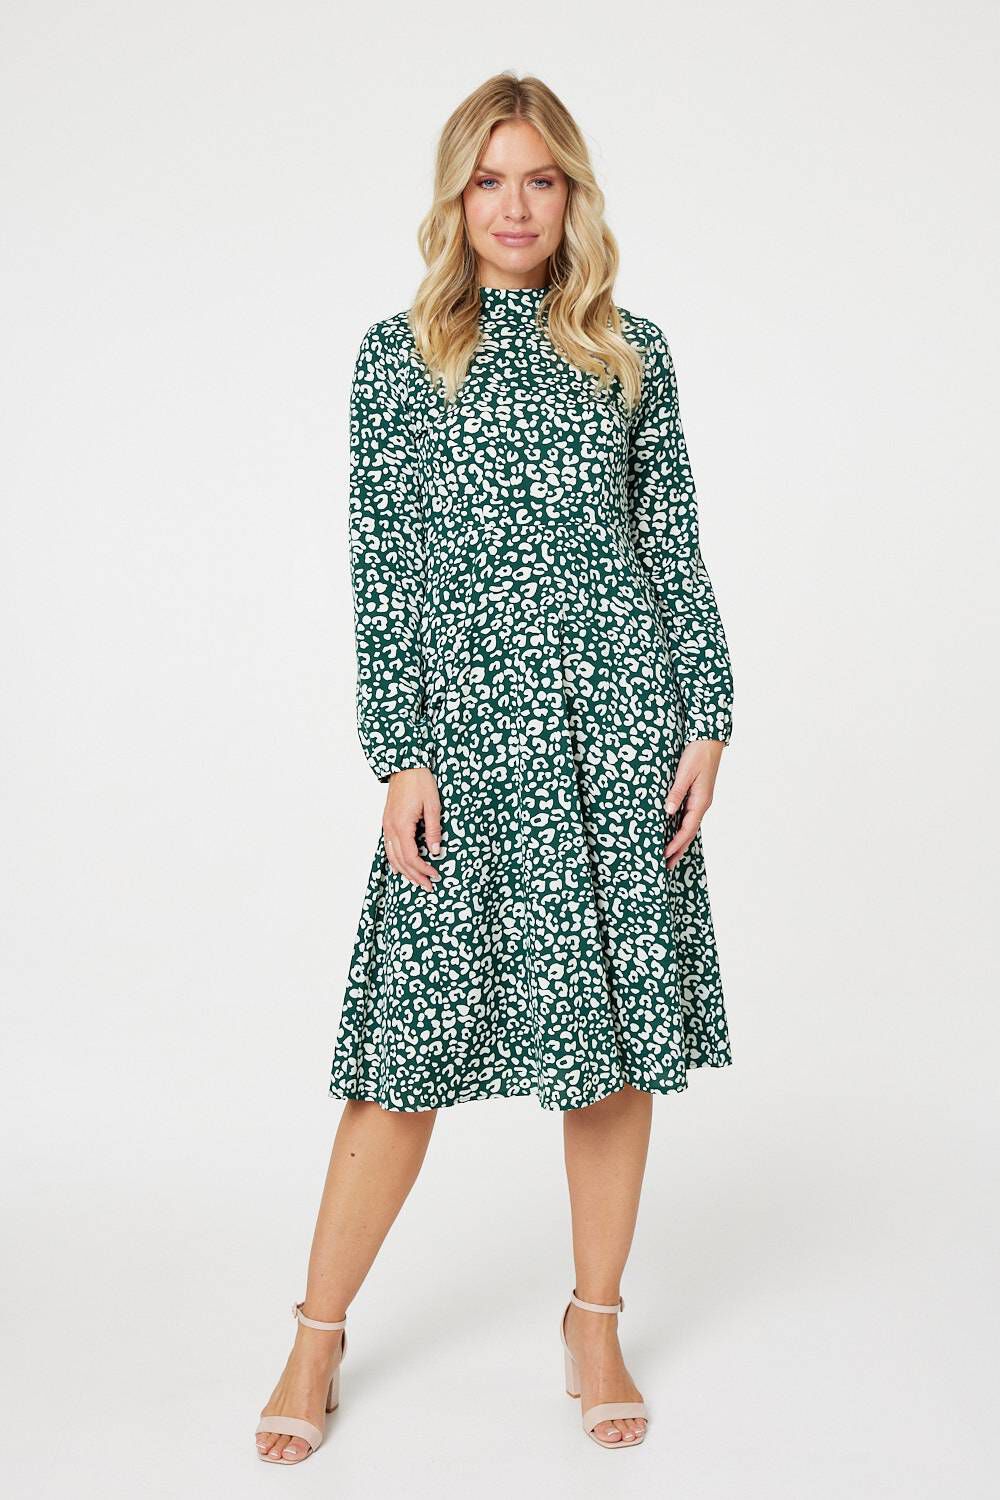 Izabel London Women’s Green Leopard Print Stylish High Neck Tea Dress, Size: 8